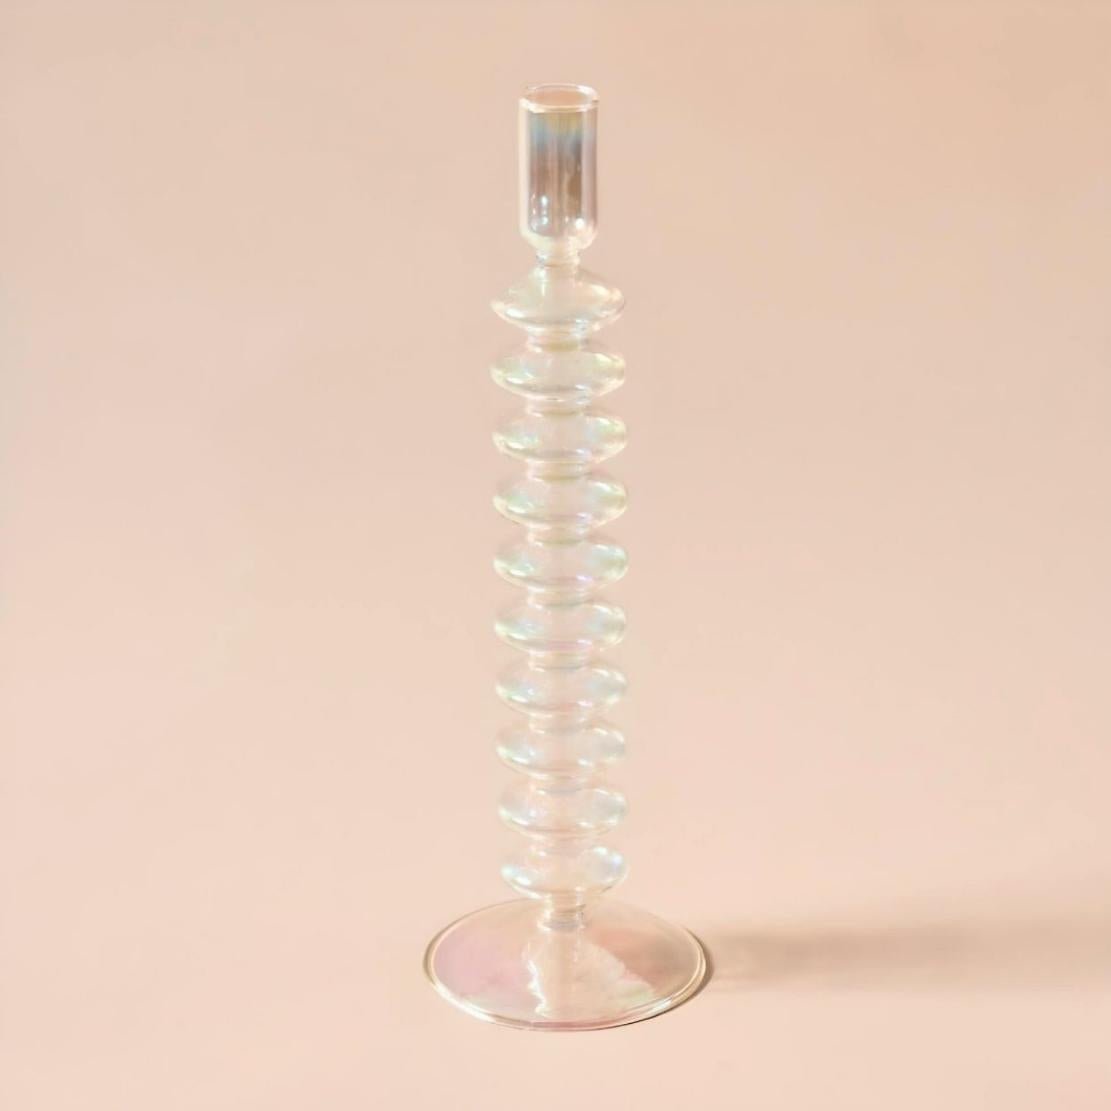 Tall, glass rippled candlestick holder